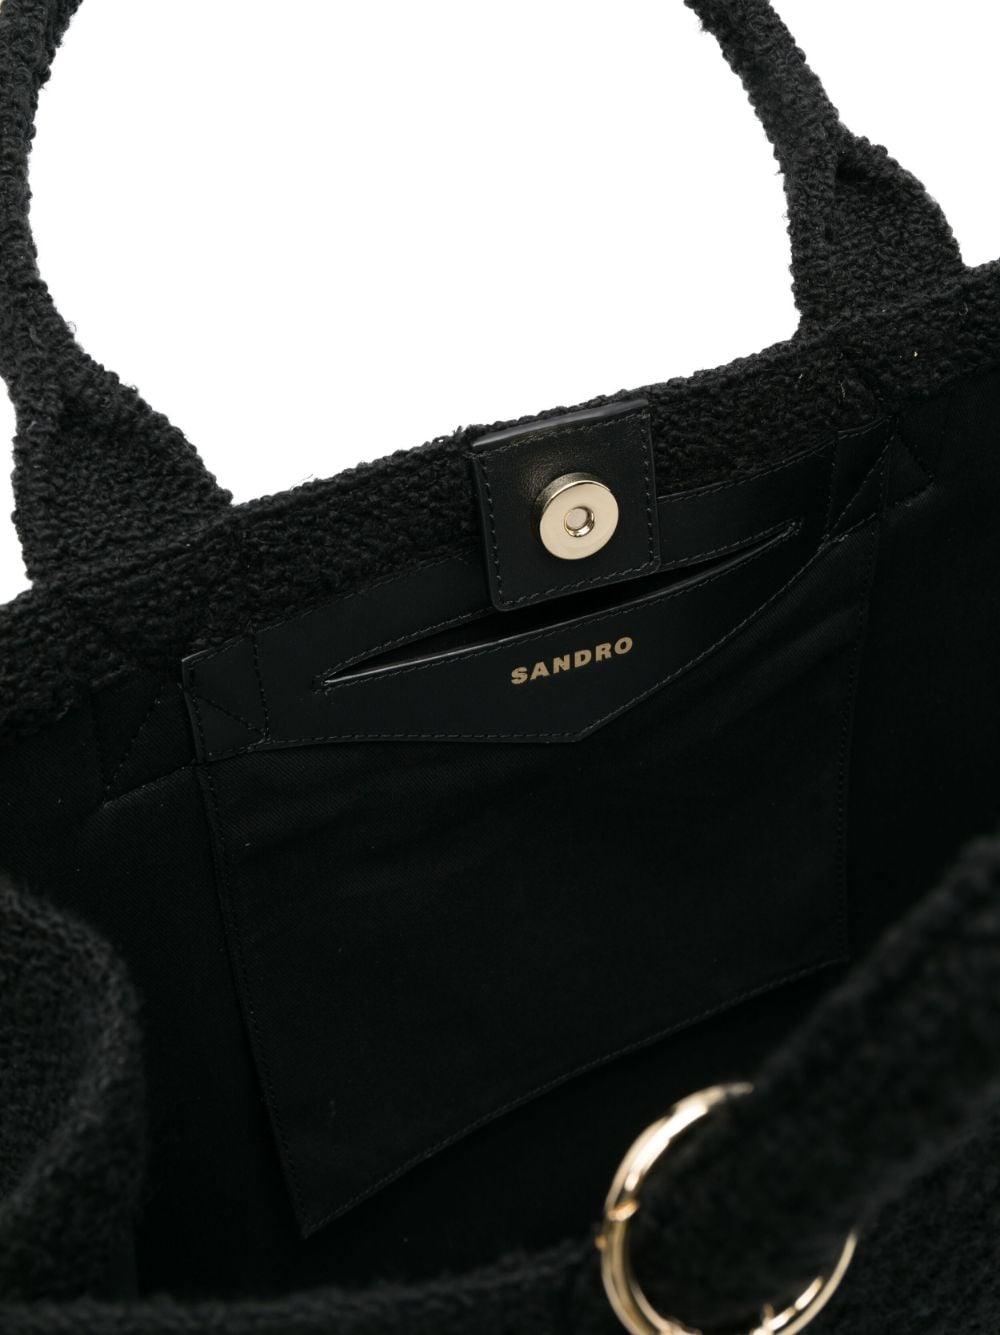 Sandro Paris Leather Tote Bag